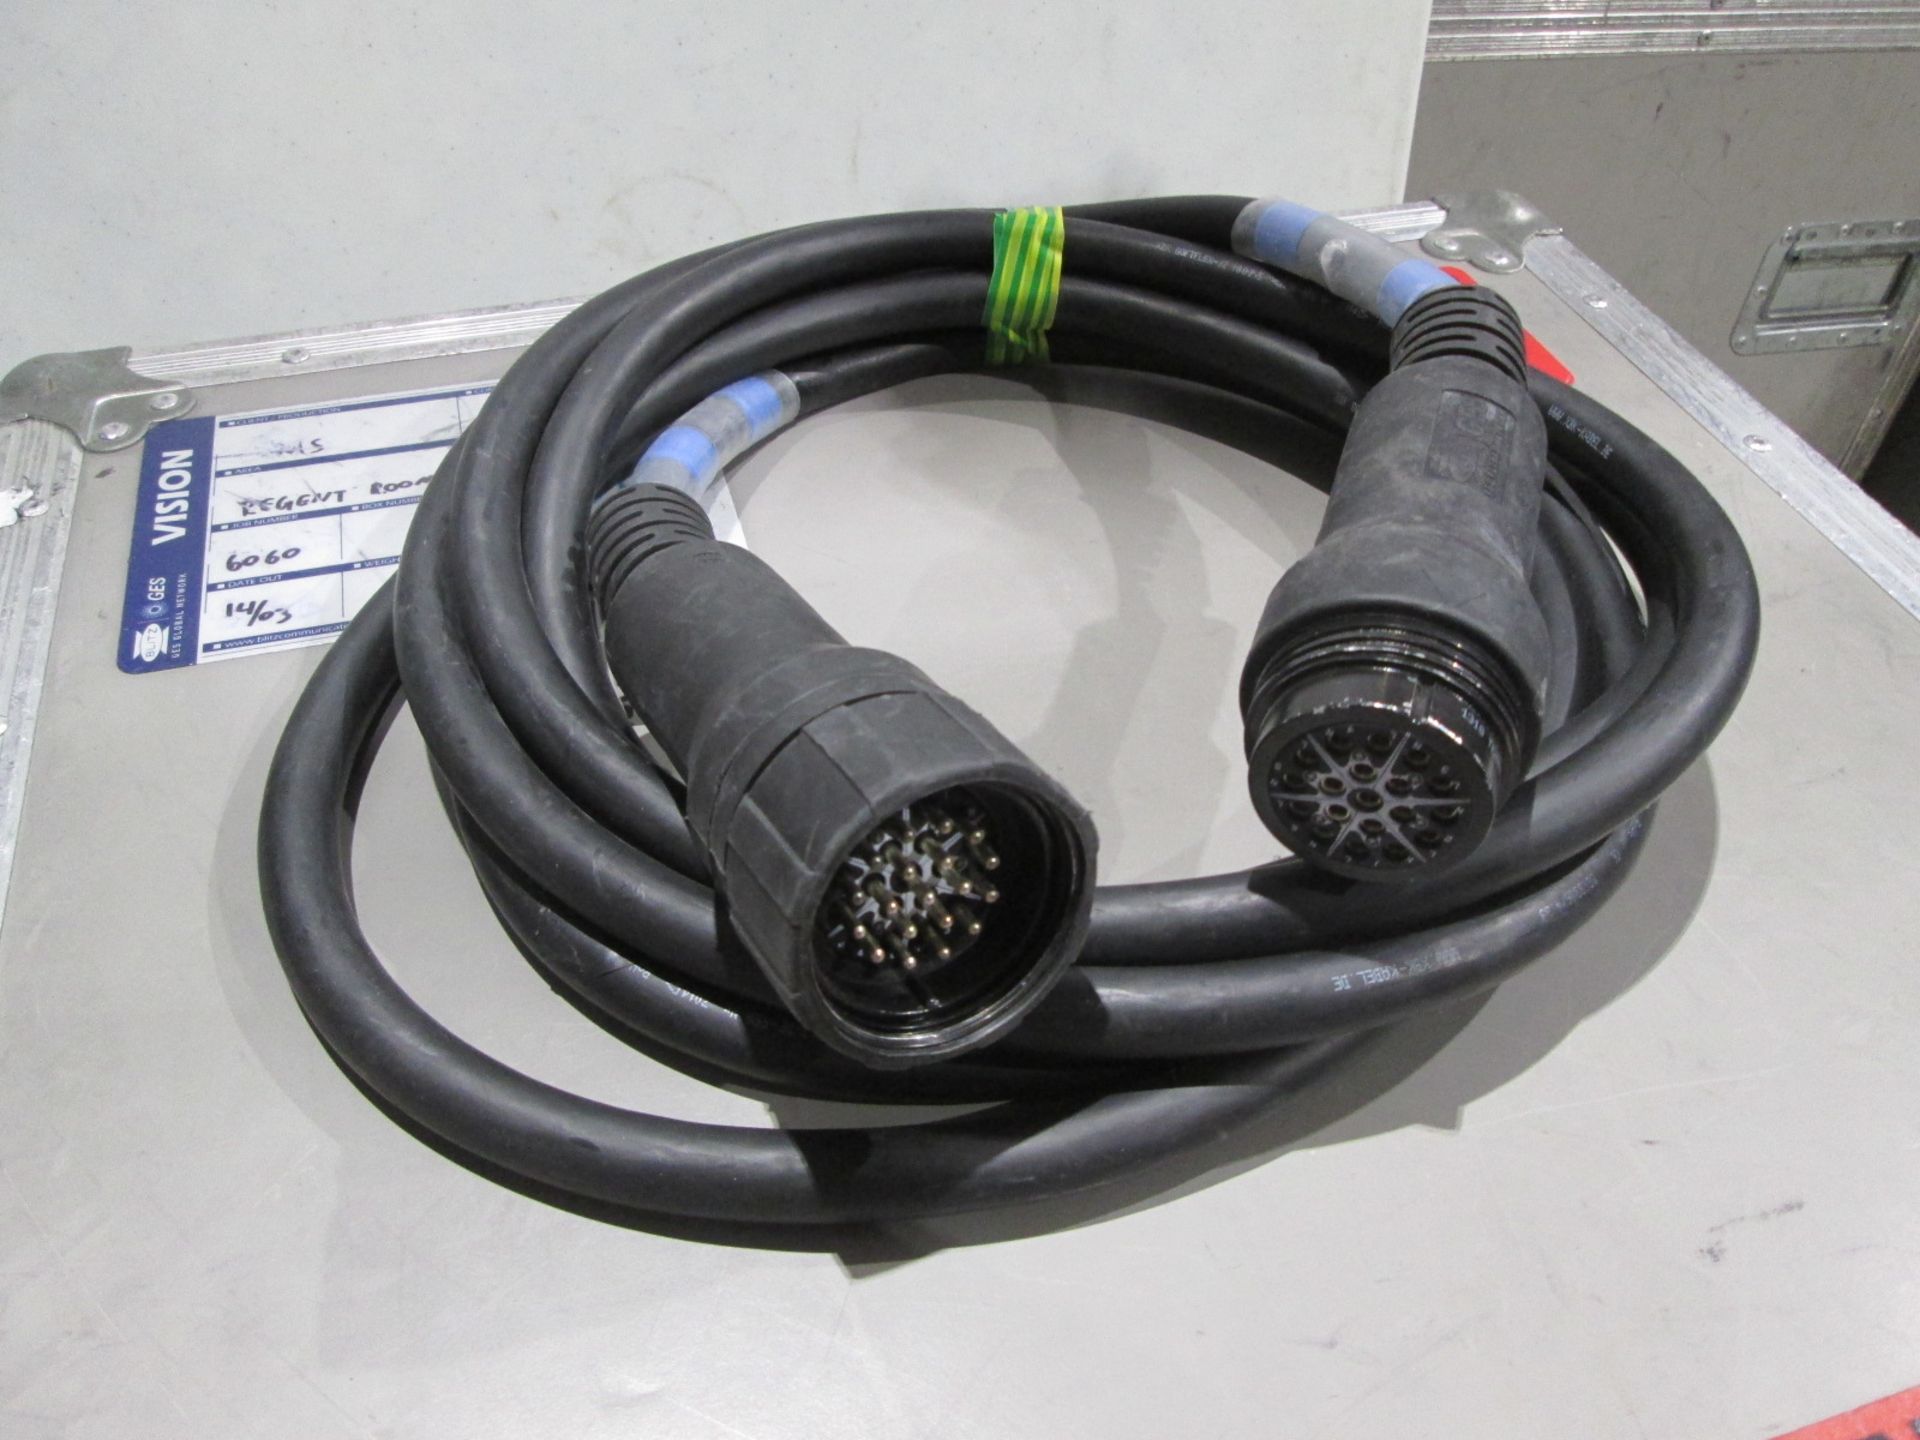 TEN47 19 Pin Socapex Cable, Length 5 Metres (Qty 2)